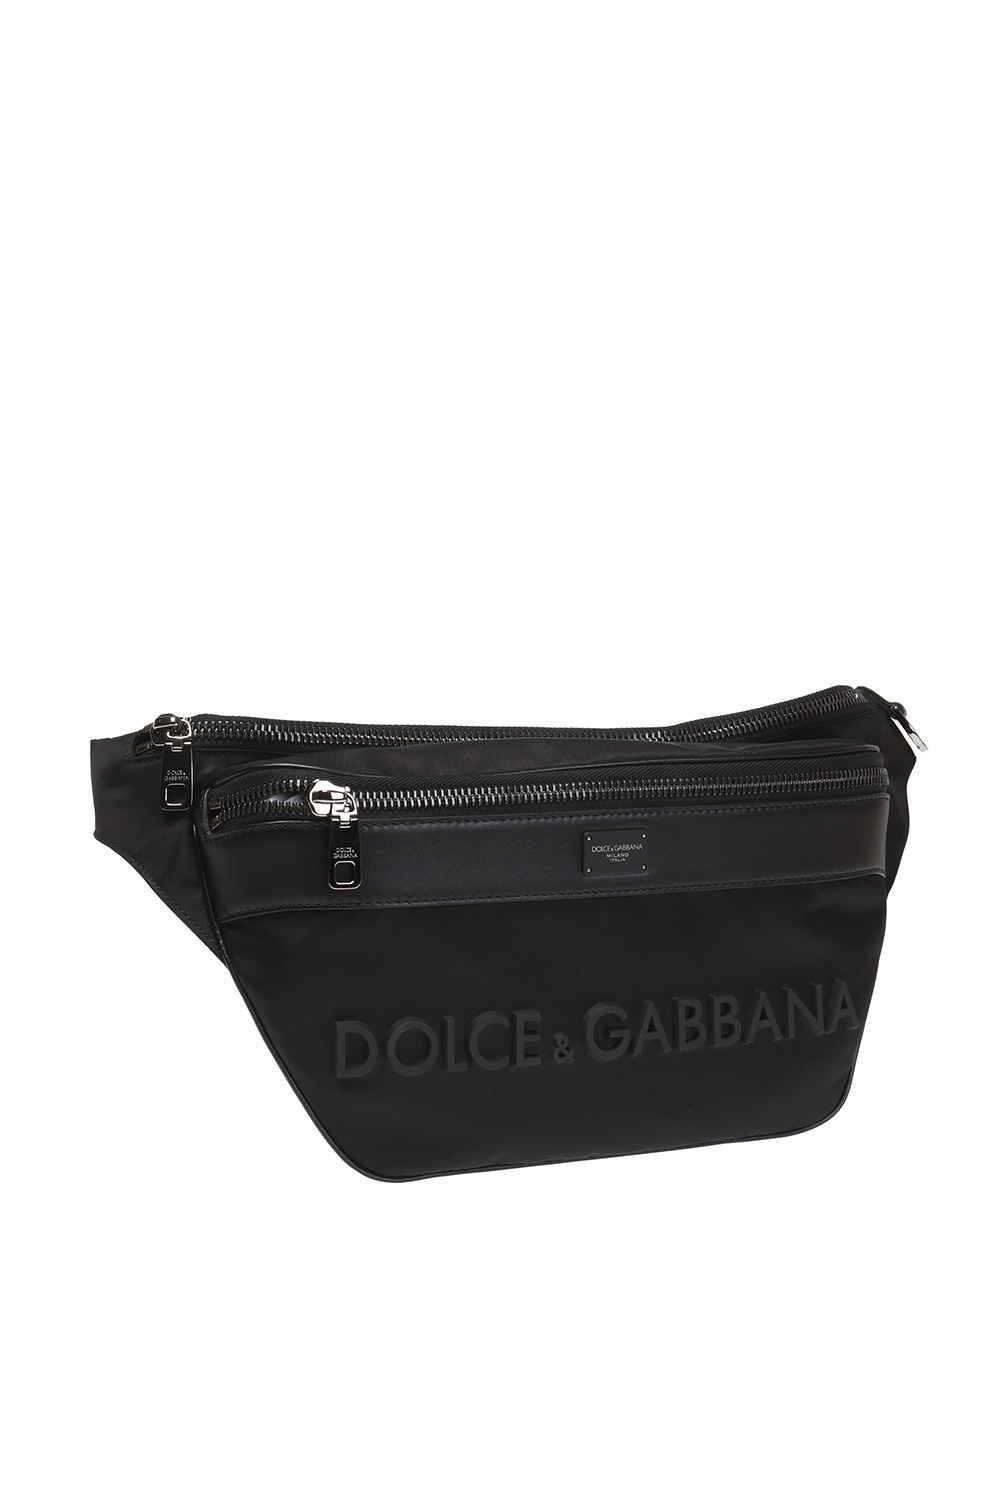 dolce & gabbana belt bag